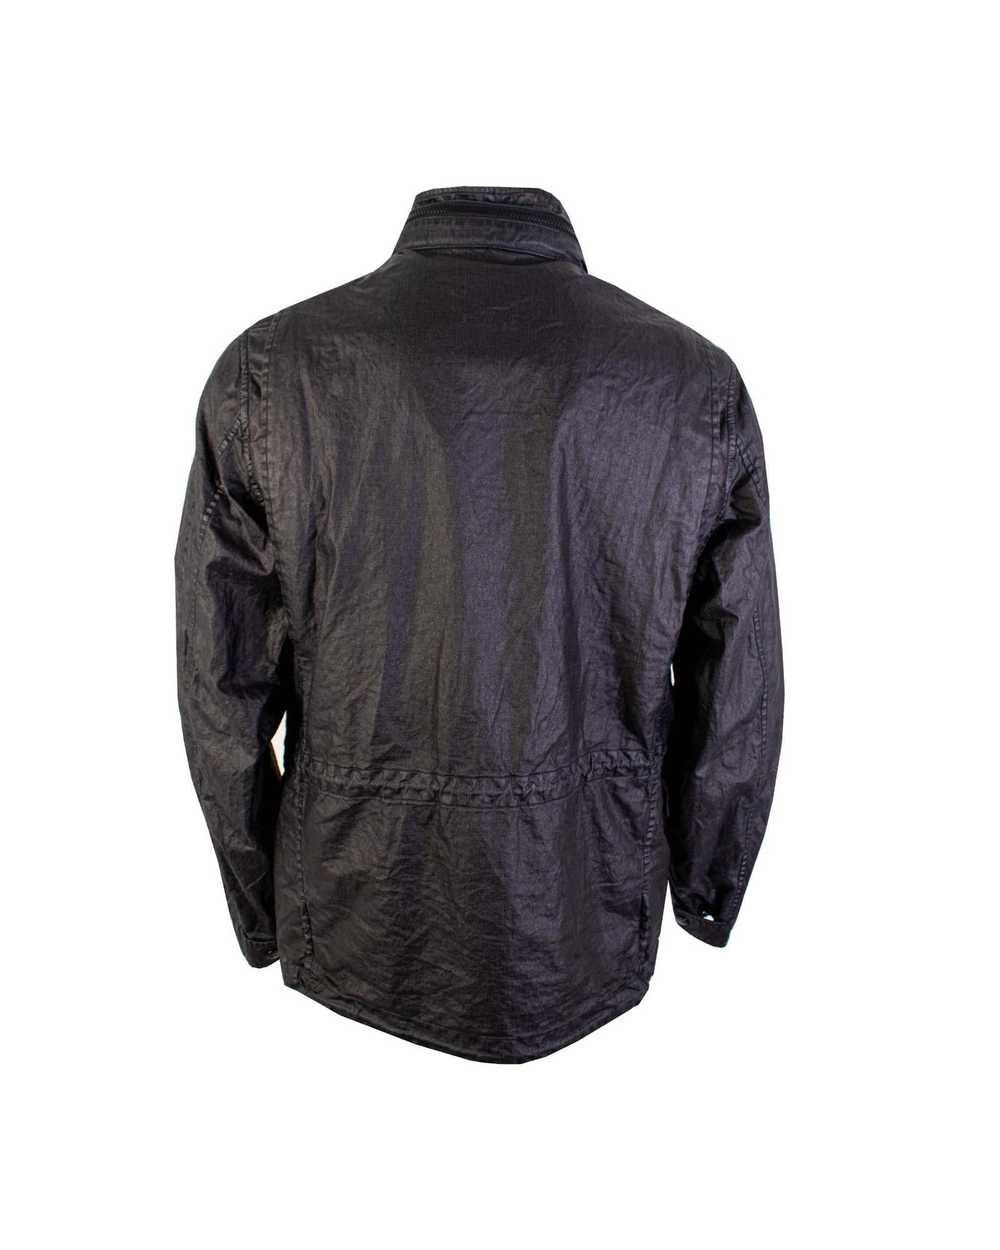 C.P. Company Wax Effect Overshirt Jacket - image 4